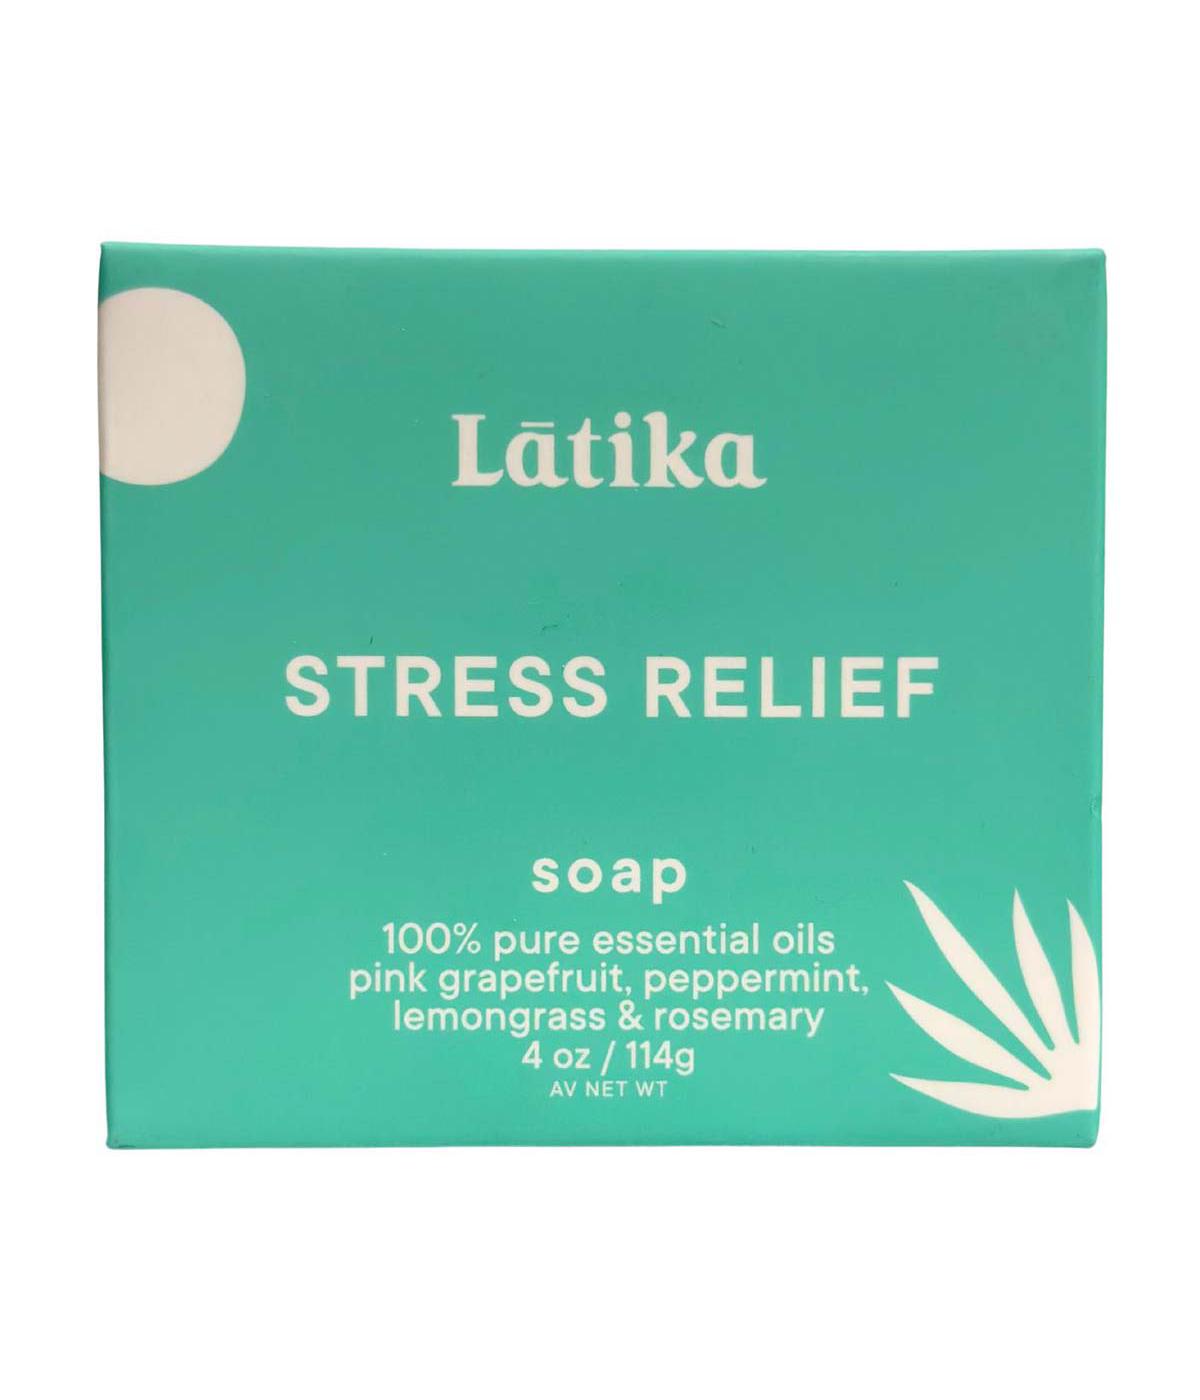 Latika Body Essentials Stress Relief Soap; image 1 of 2